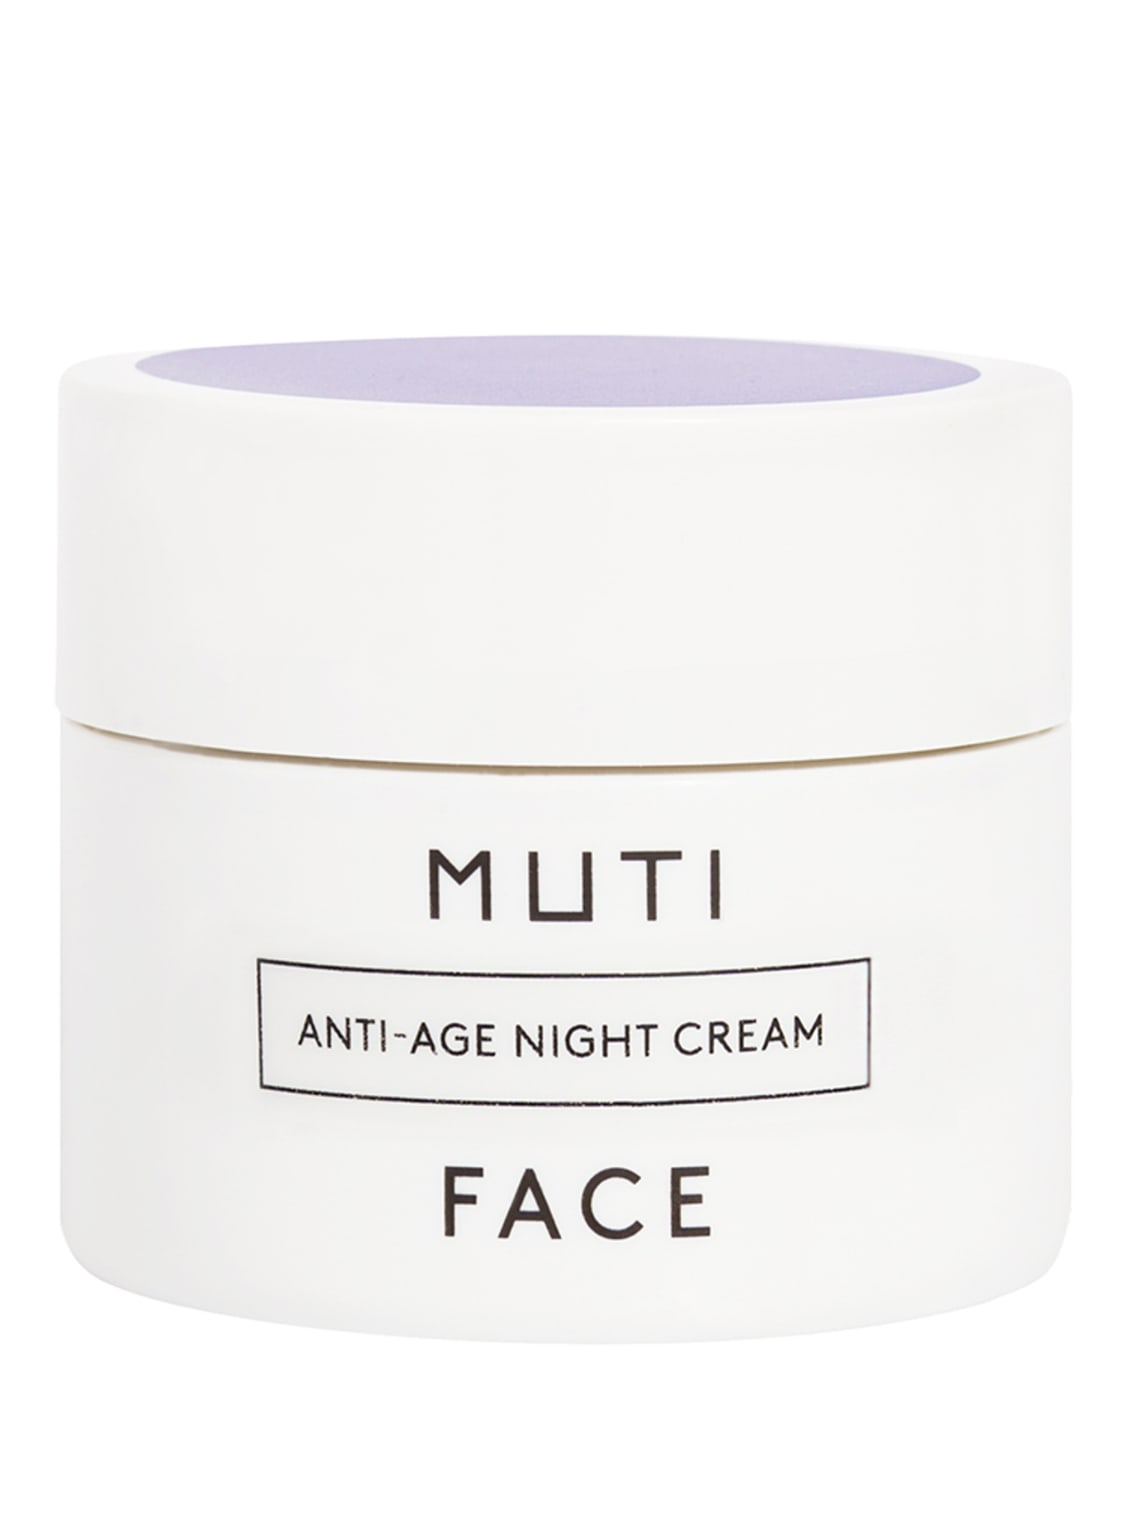 Muti Anti-Age Night Cream